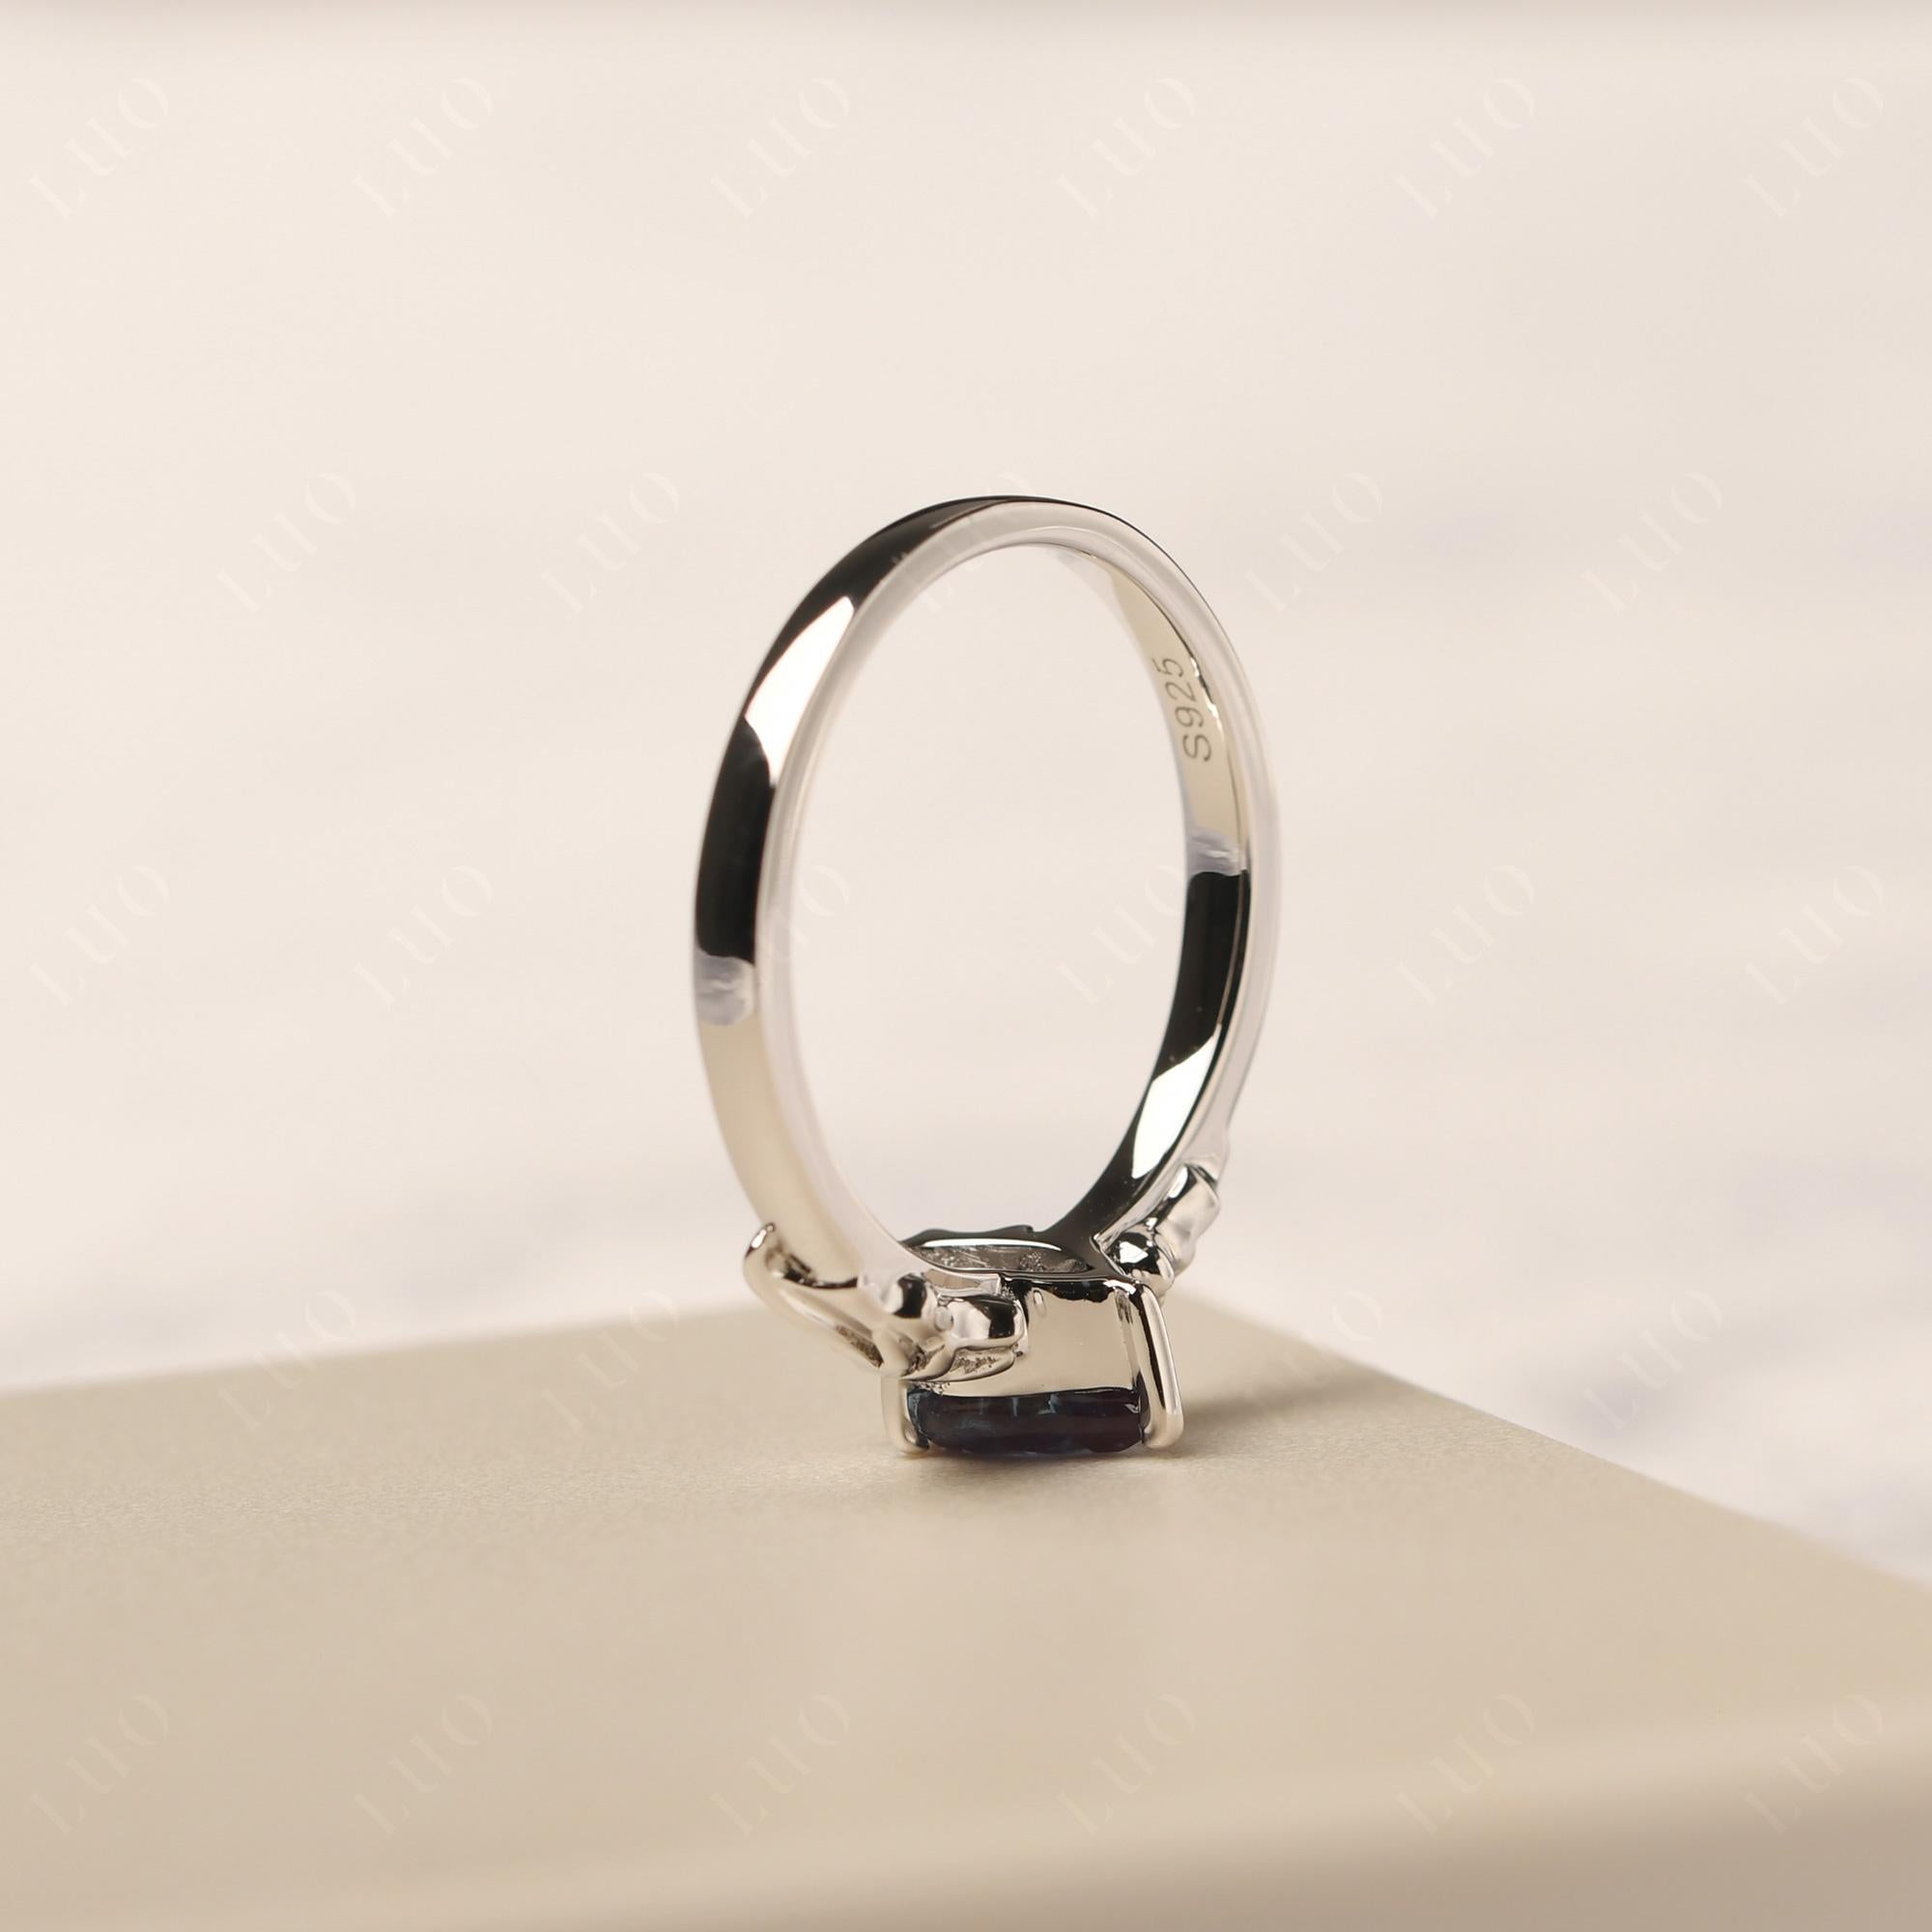 Alexandrite Bat Engagement Ring - LUO Jewelry